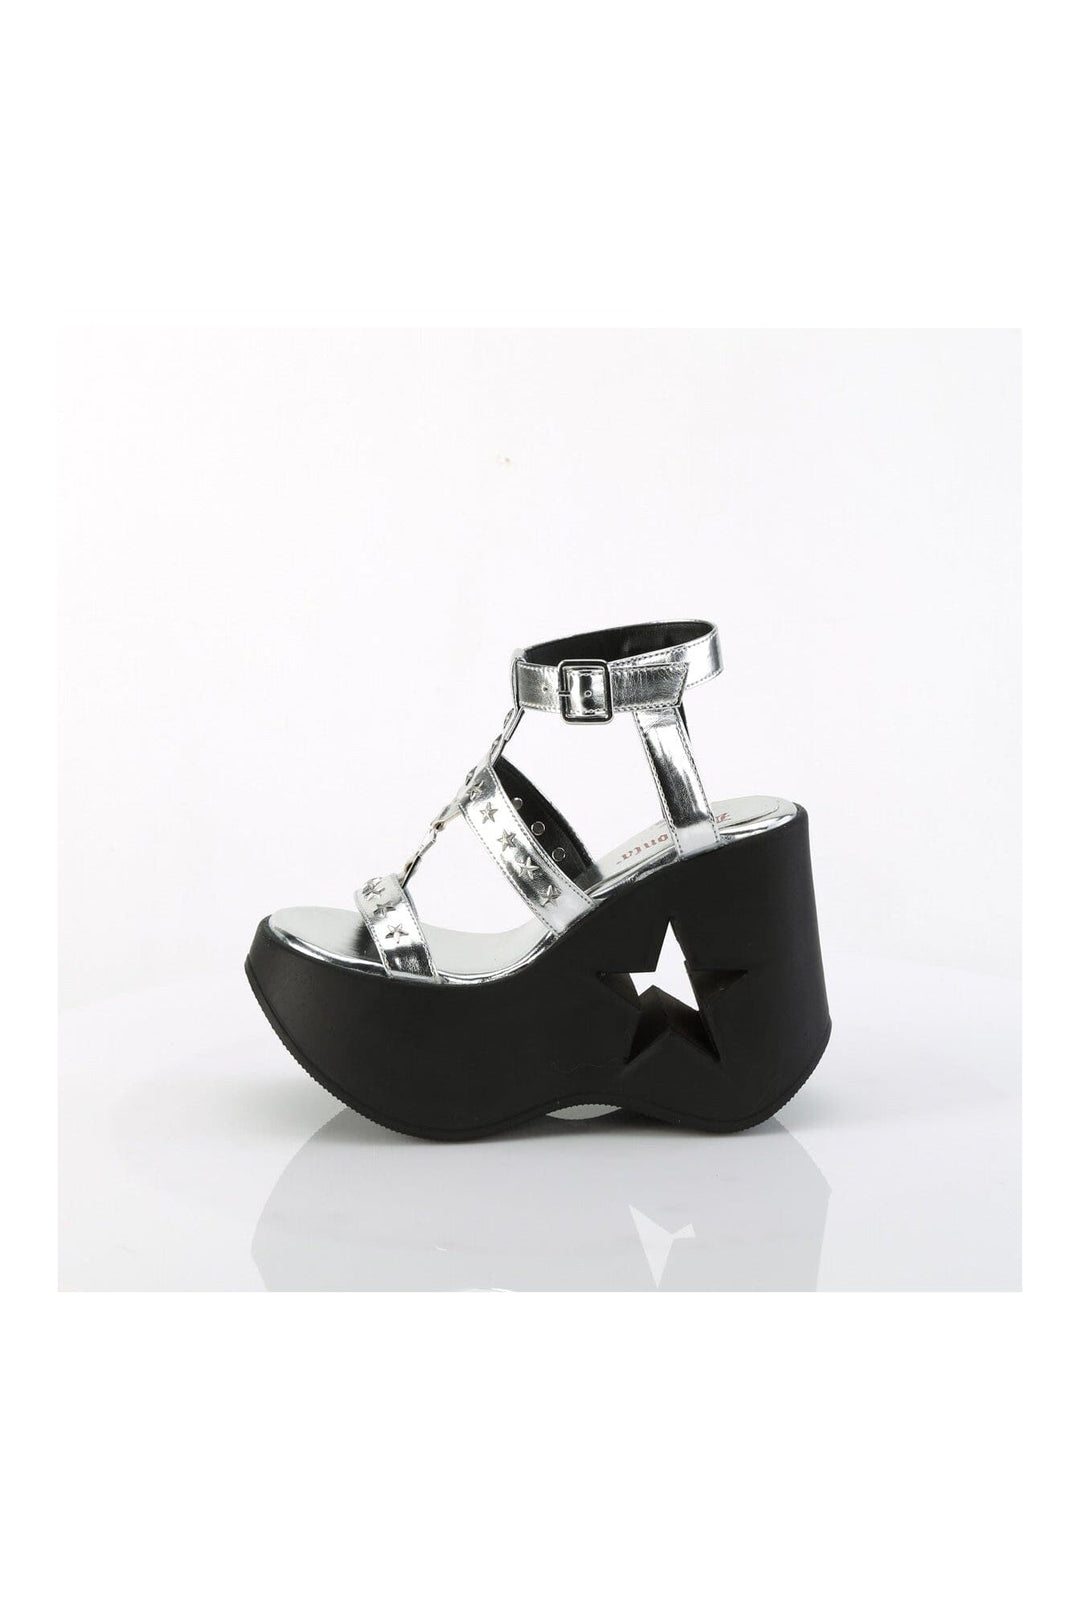 DYNAMITE-12 Silver Vegan Leather Sandal-Sandals-Demonia-SEXYSHOES.COM